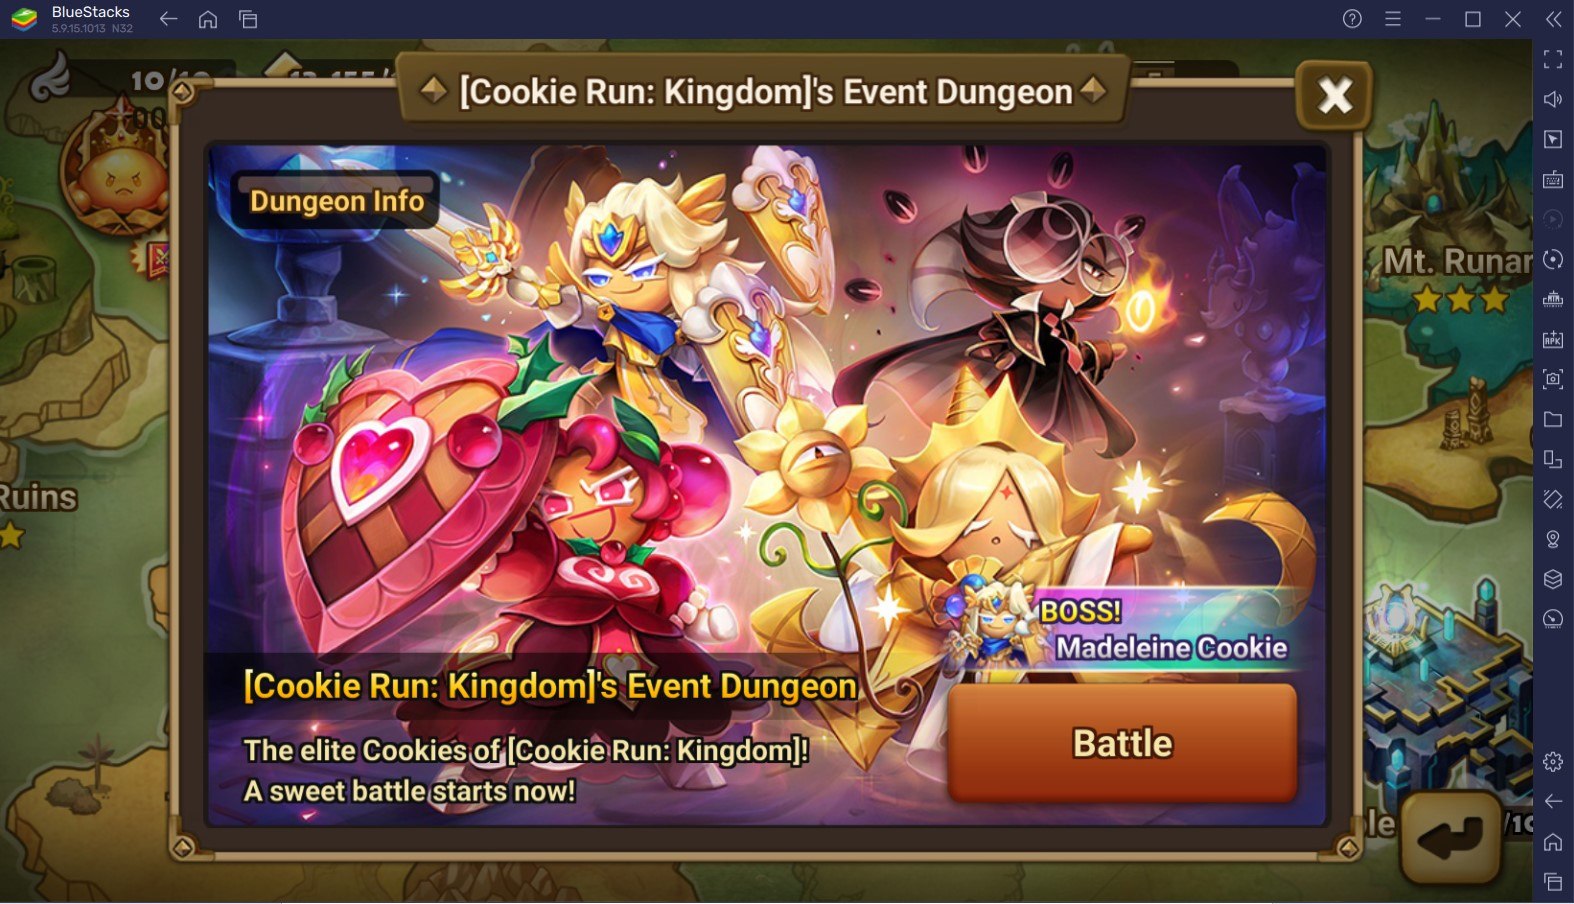 Summoners War X Cookie Run Kingdom Collaboration Events and Rewards